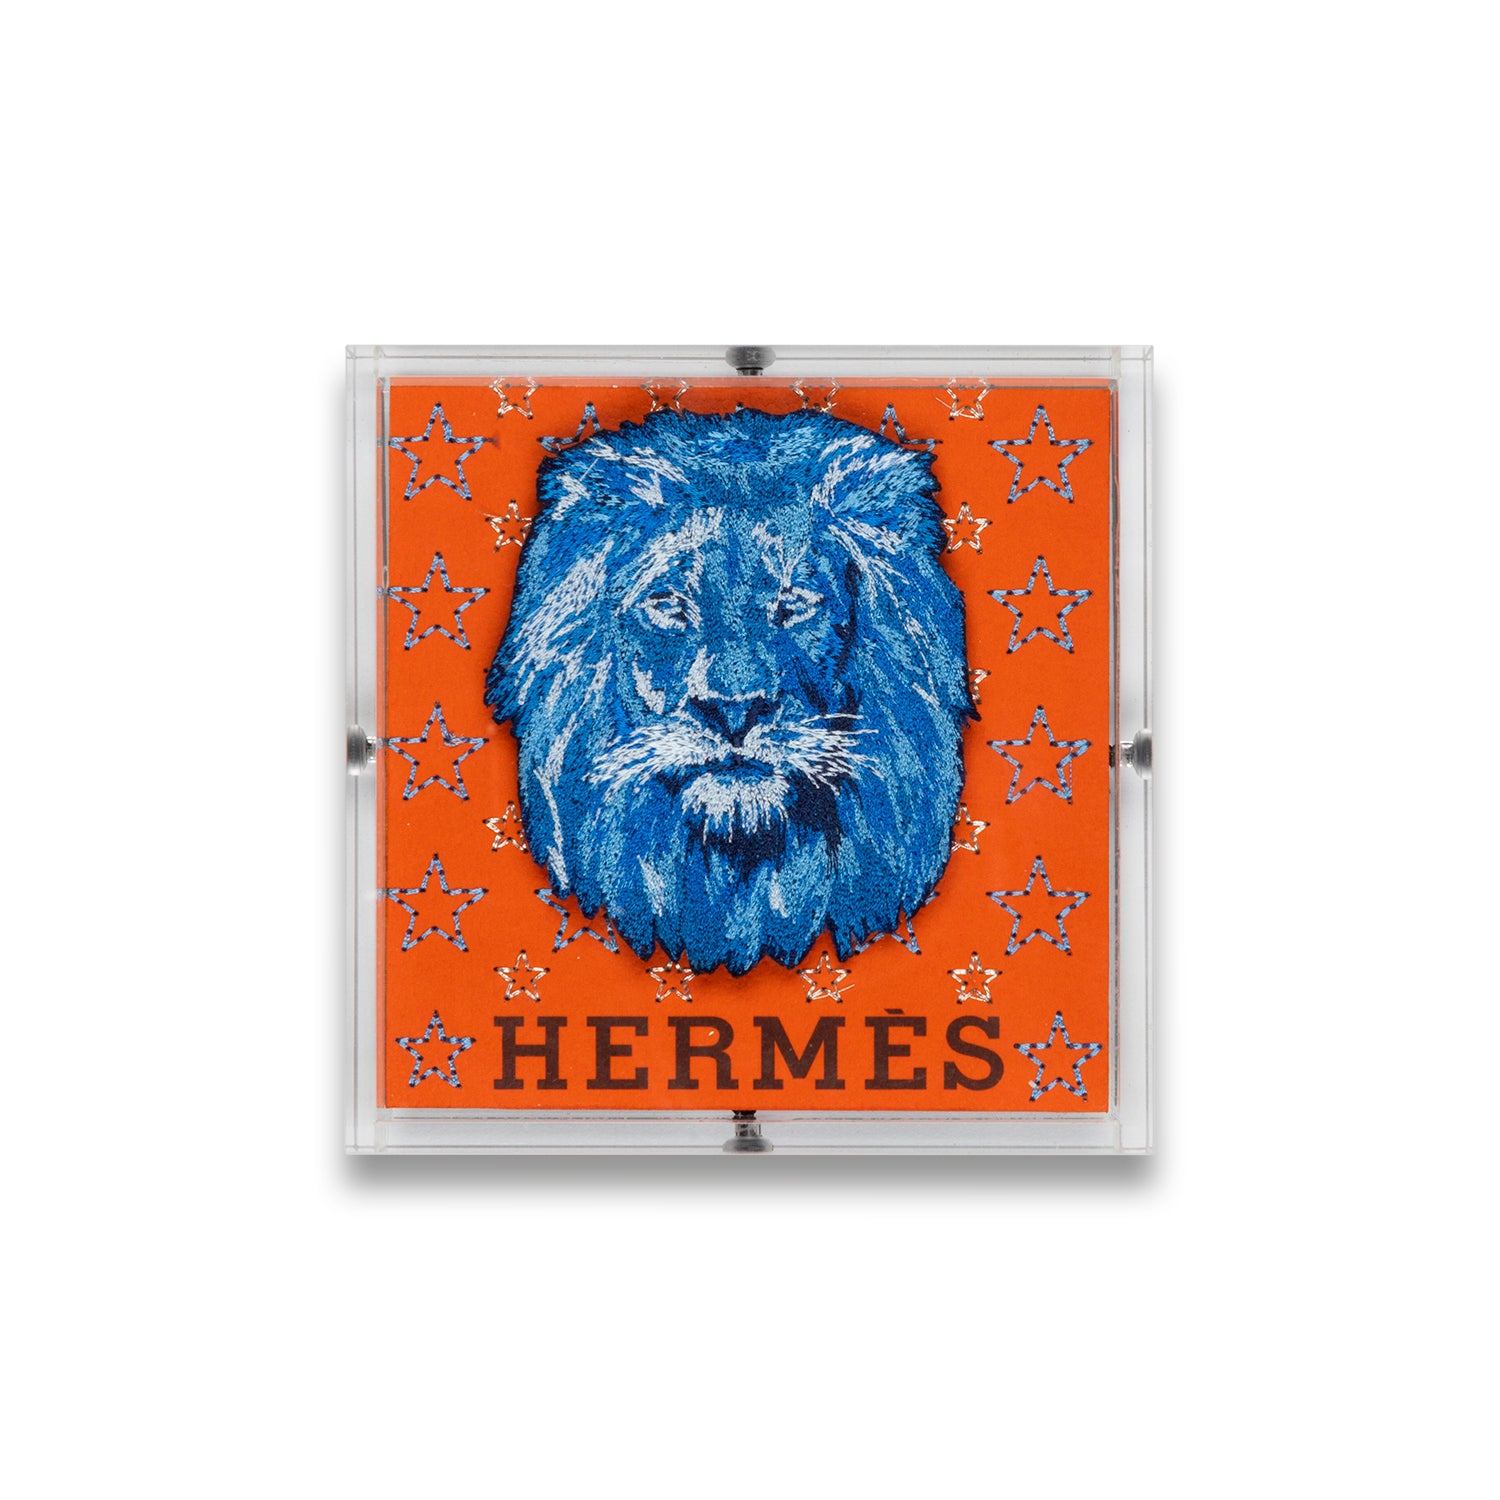 Petite Blue Hermes Strength by Stephen Wilson (5x5x2